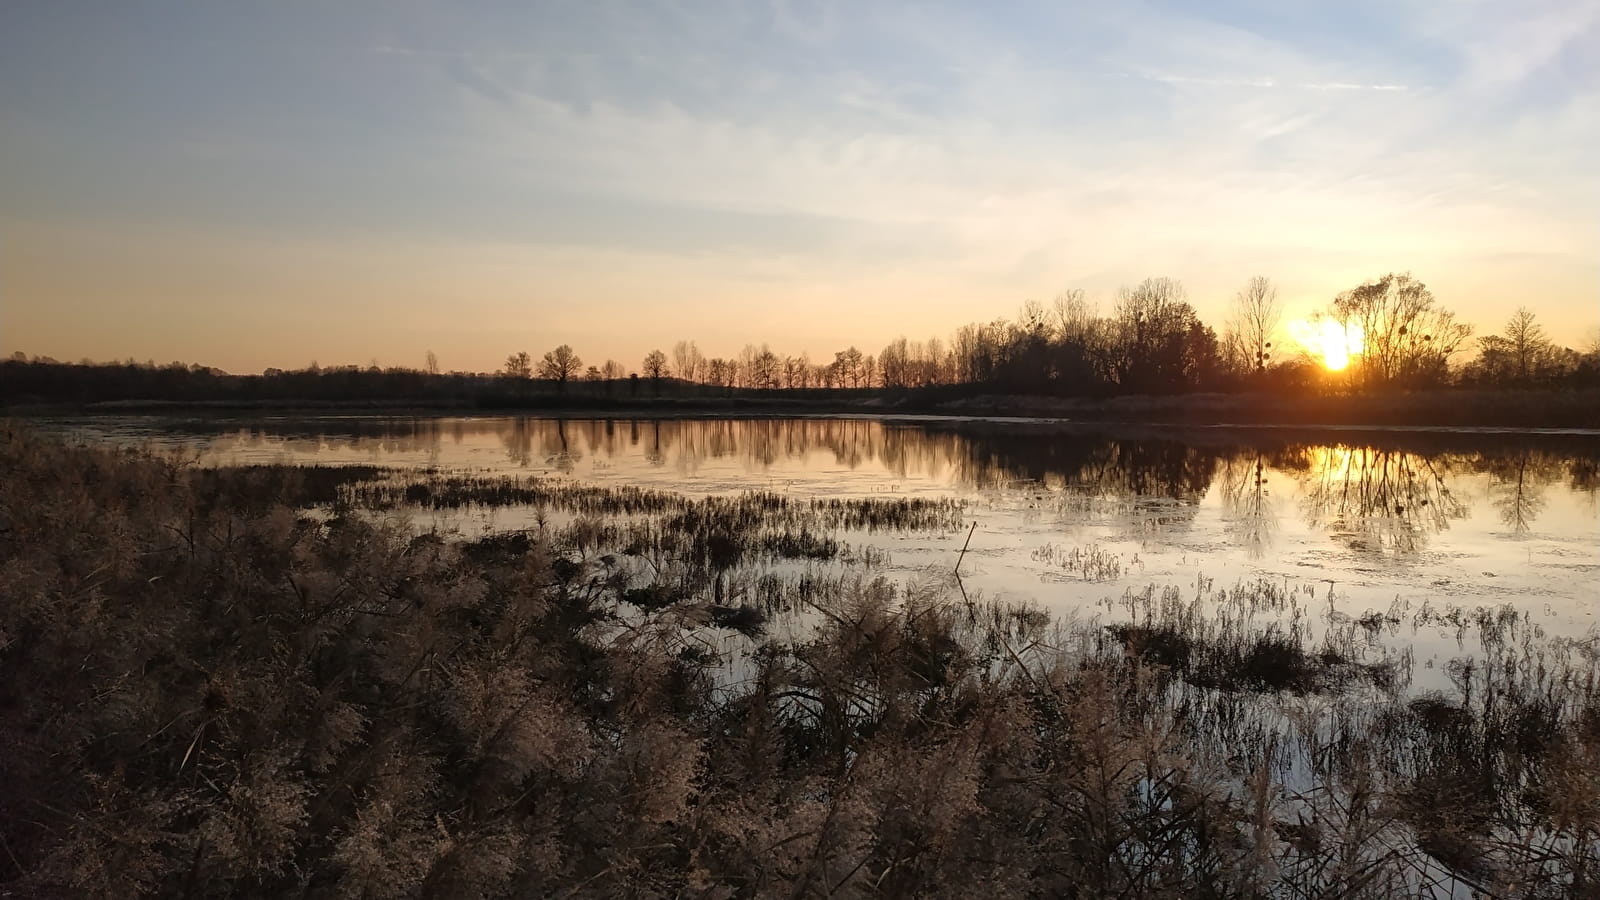 The twilight birds of the Pontoux pond